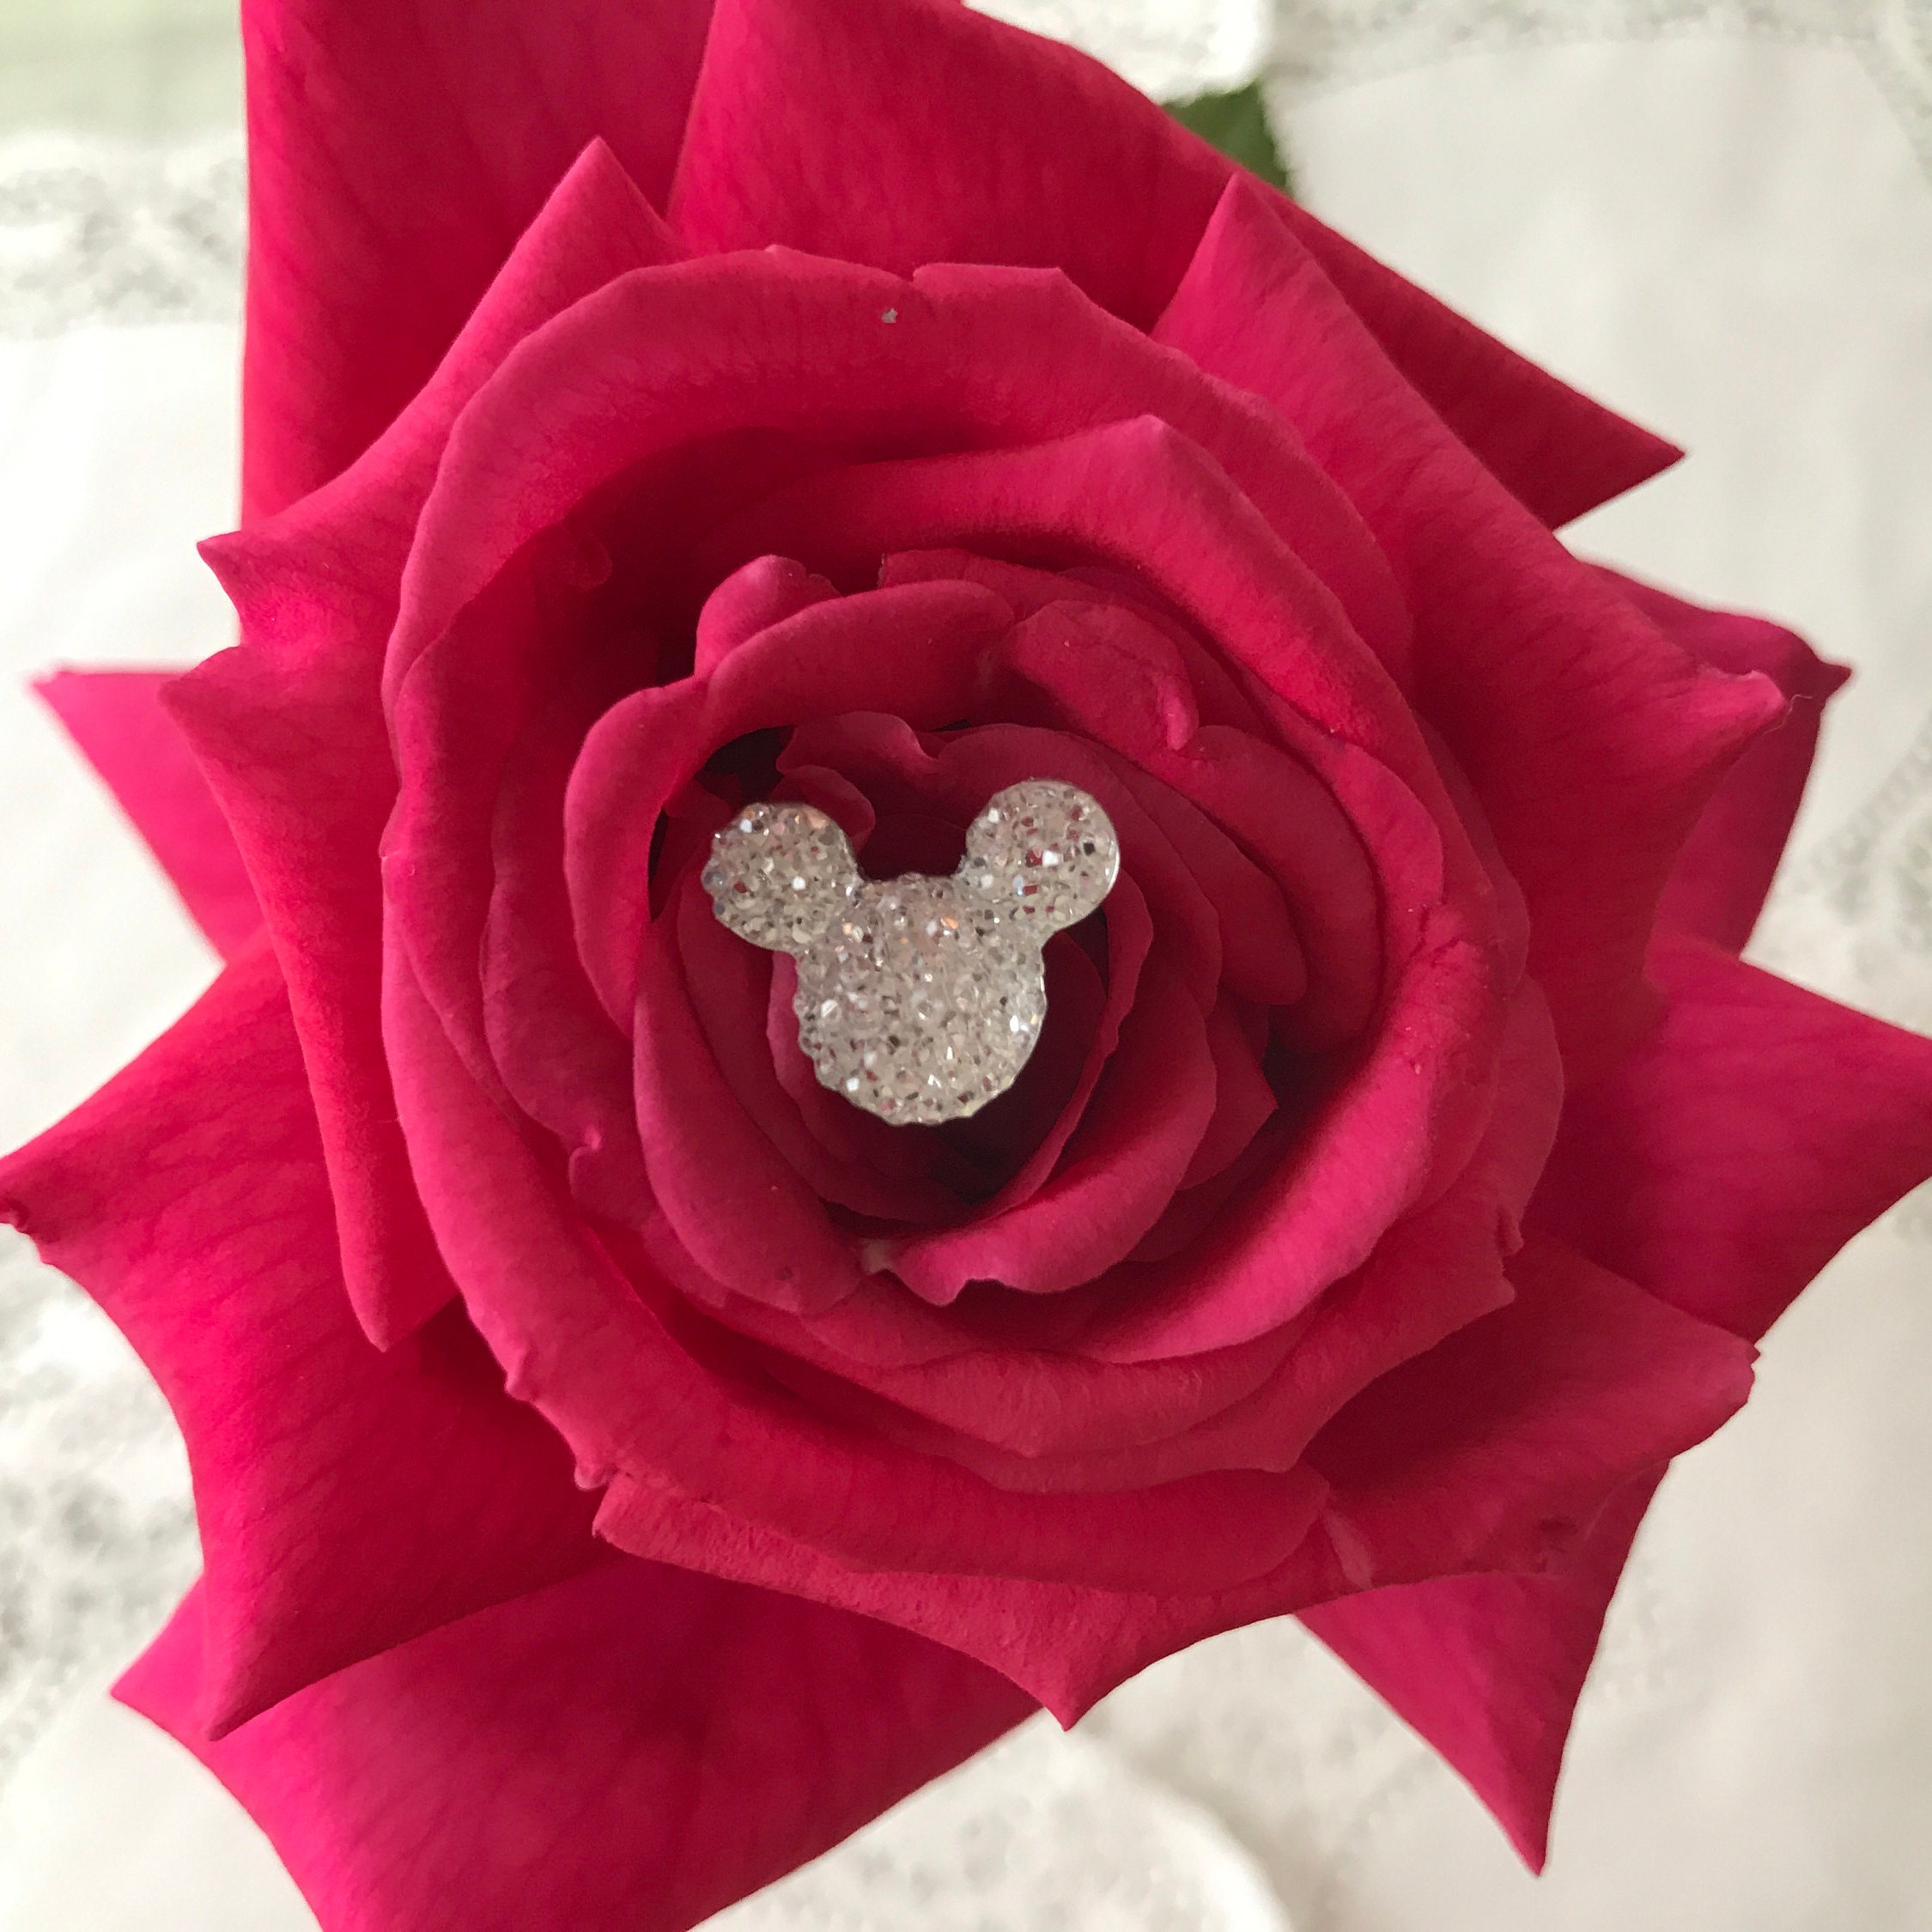 Hidden Mickey Flower Pins-Boutonniere Pins-Centerpiece Flowers